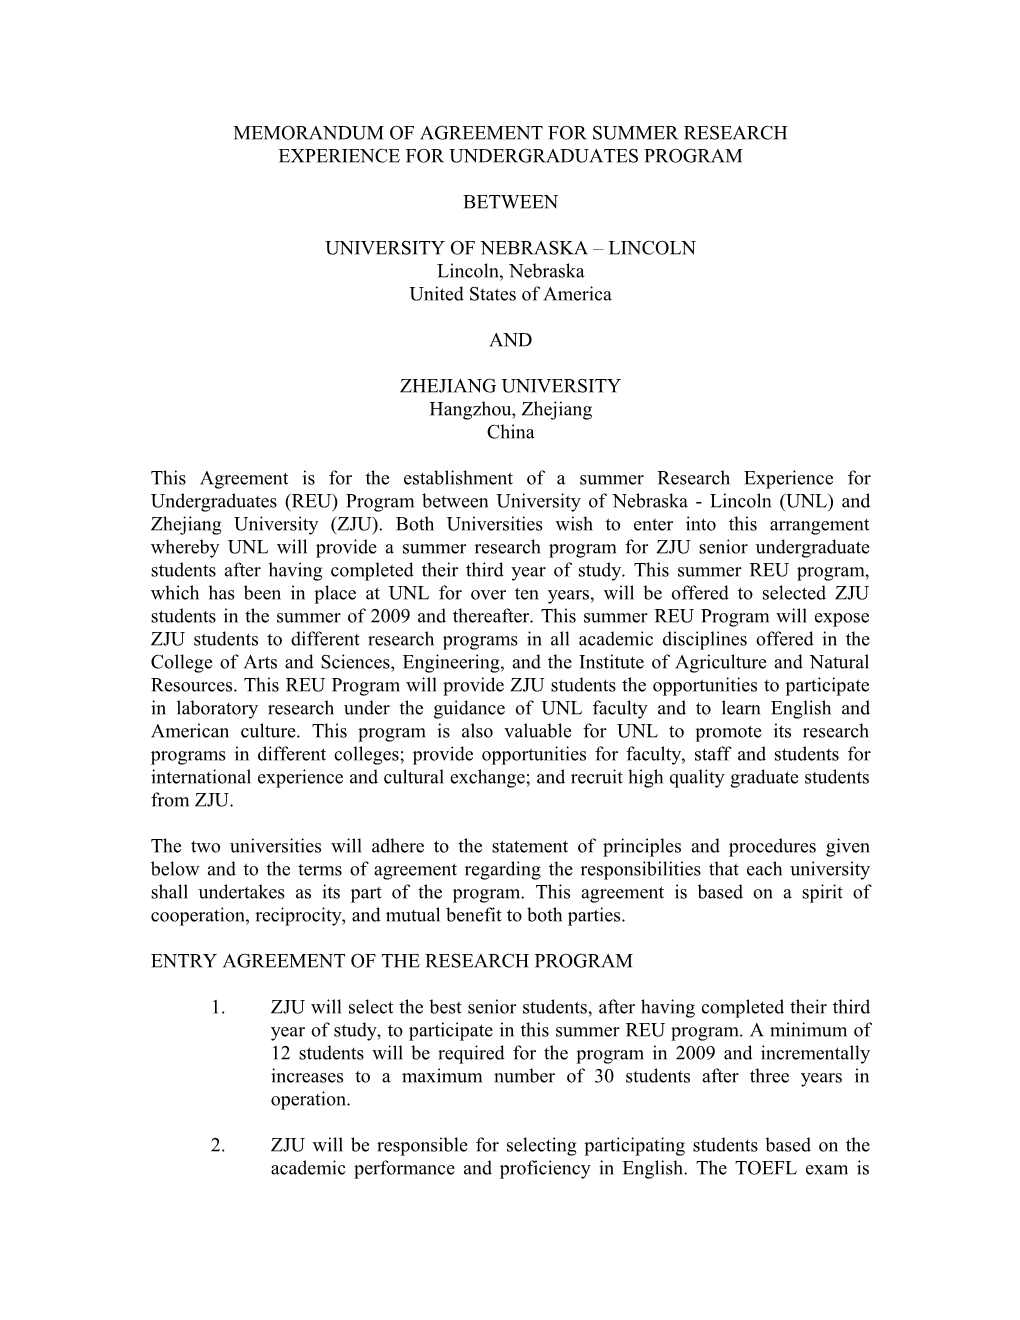 Memorandum of Agreement for Summer Research